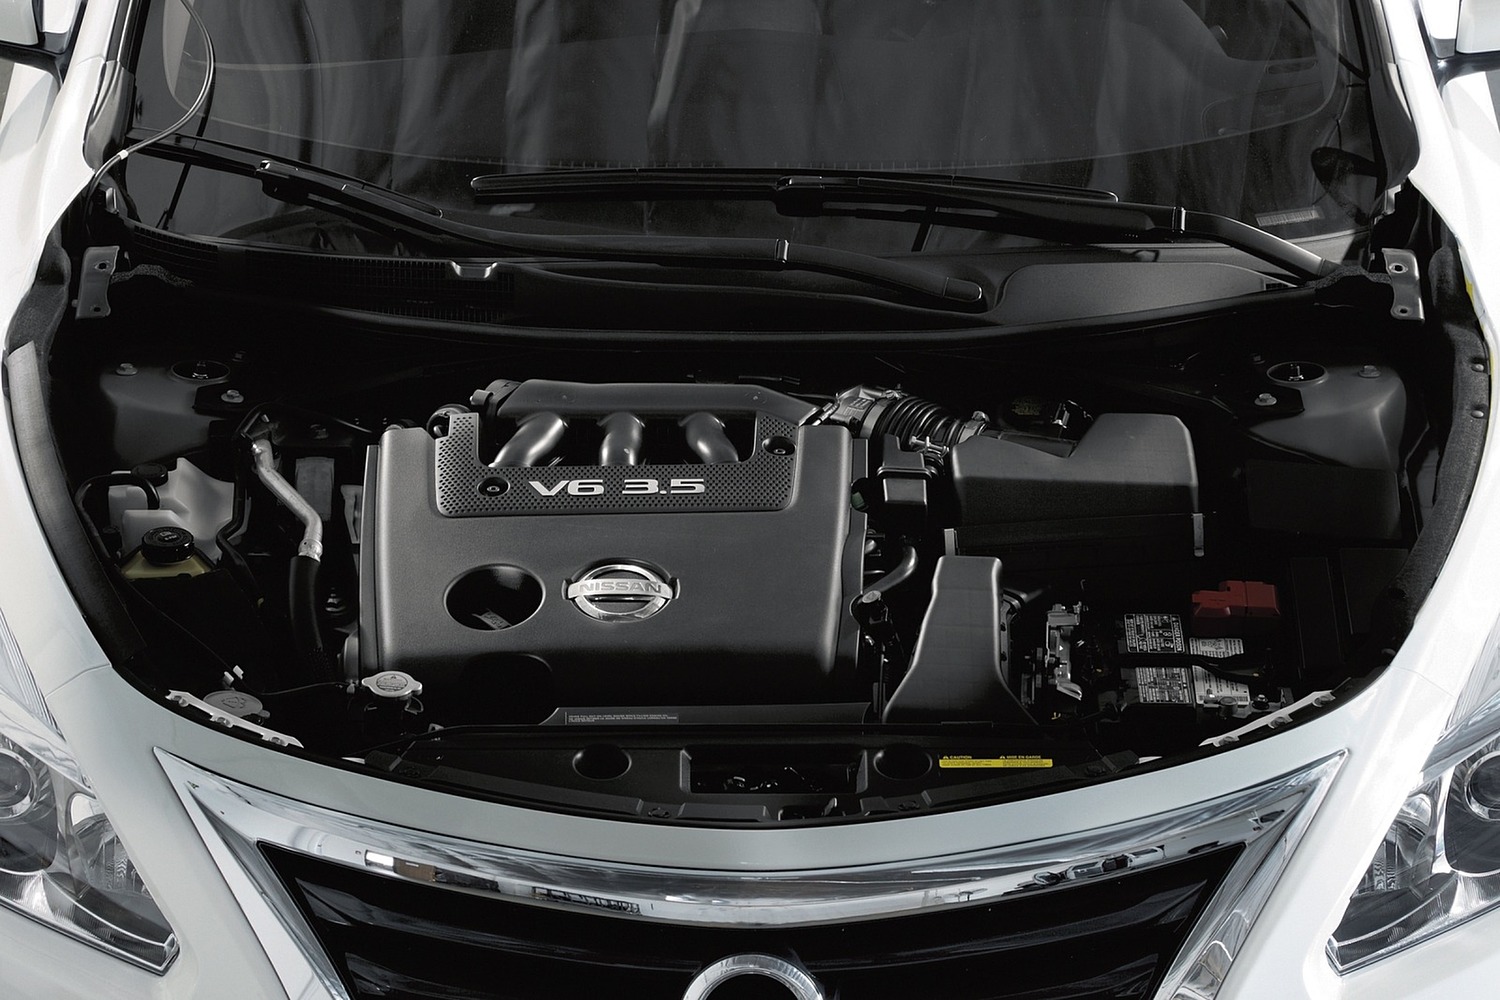 2017 Nissan Altima 3.5 SL Sedan 3.5L V6 Engine Shown